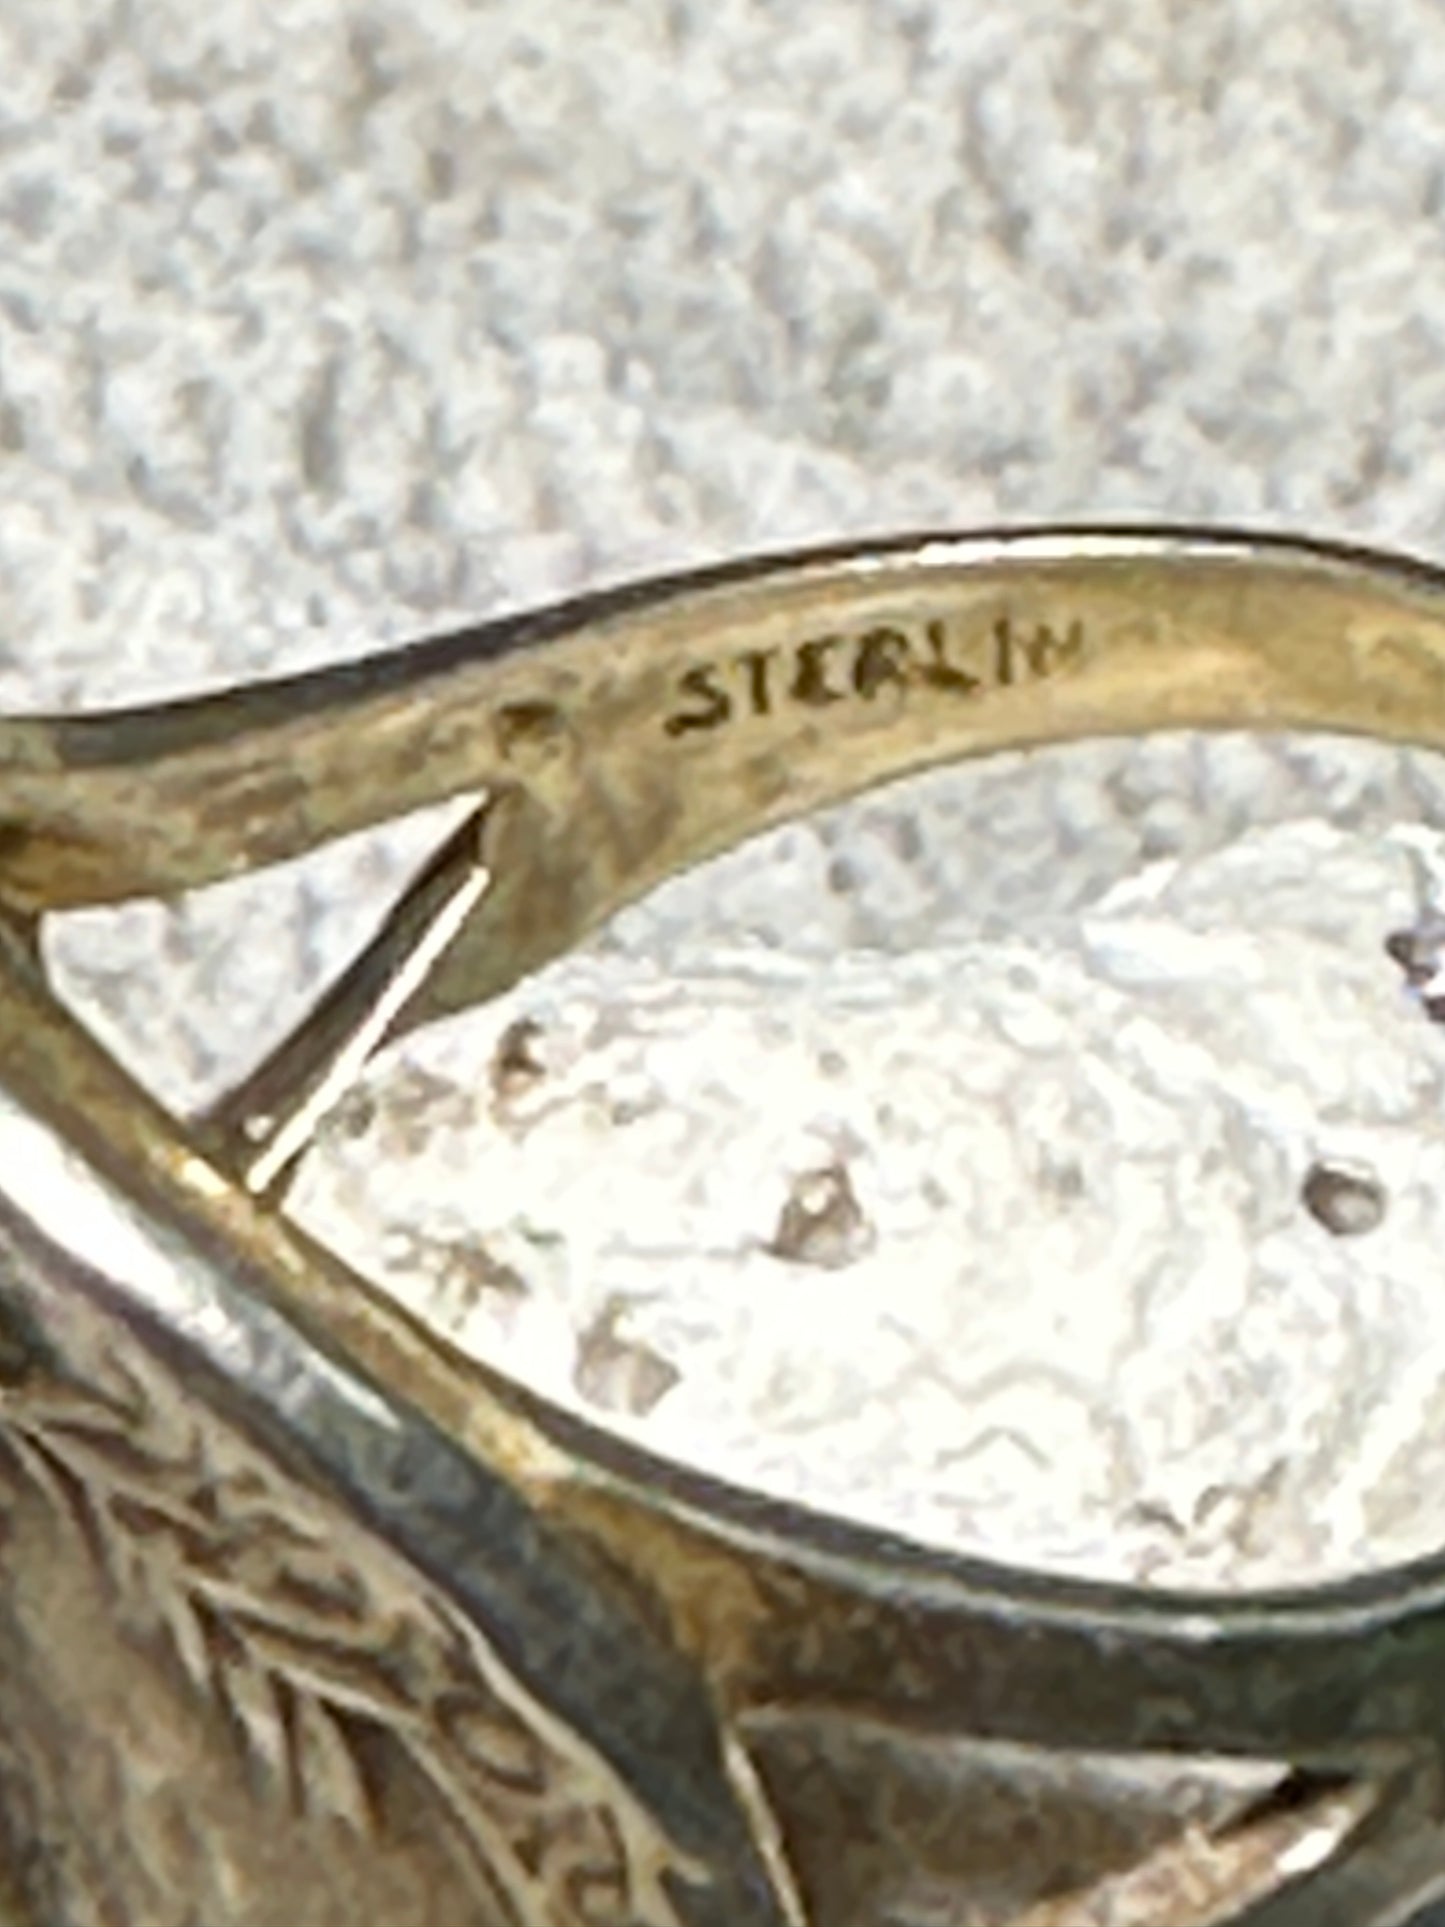 Art Nouveau ring lady band circa 1900 ring size 8.25 sterling silver women